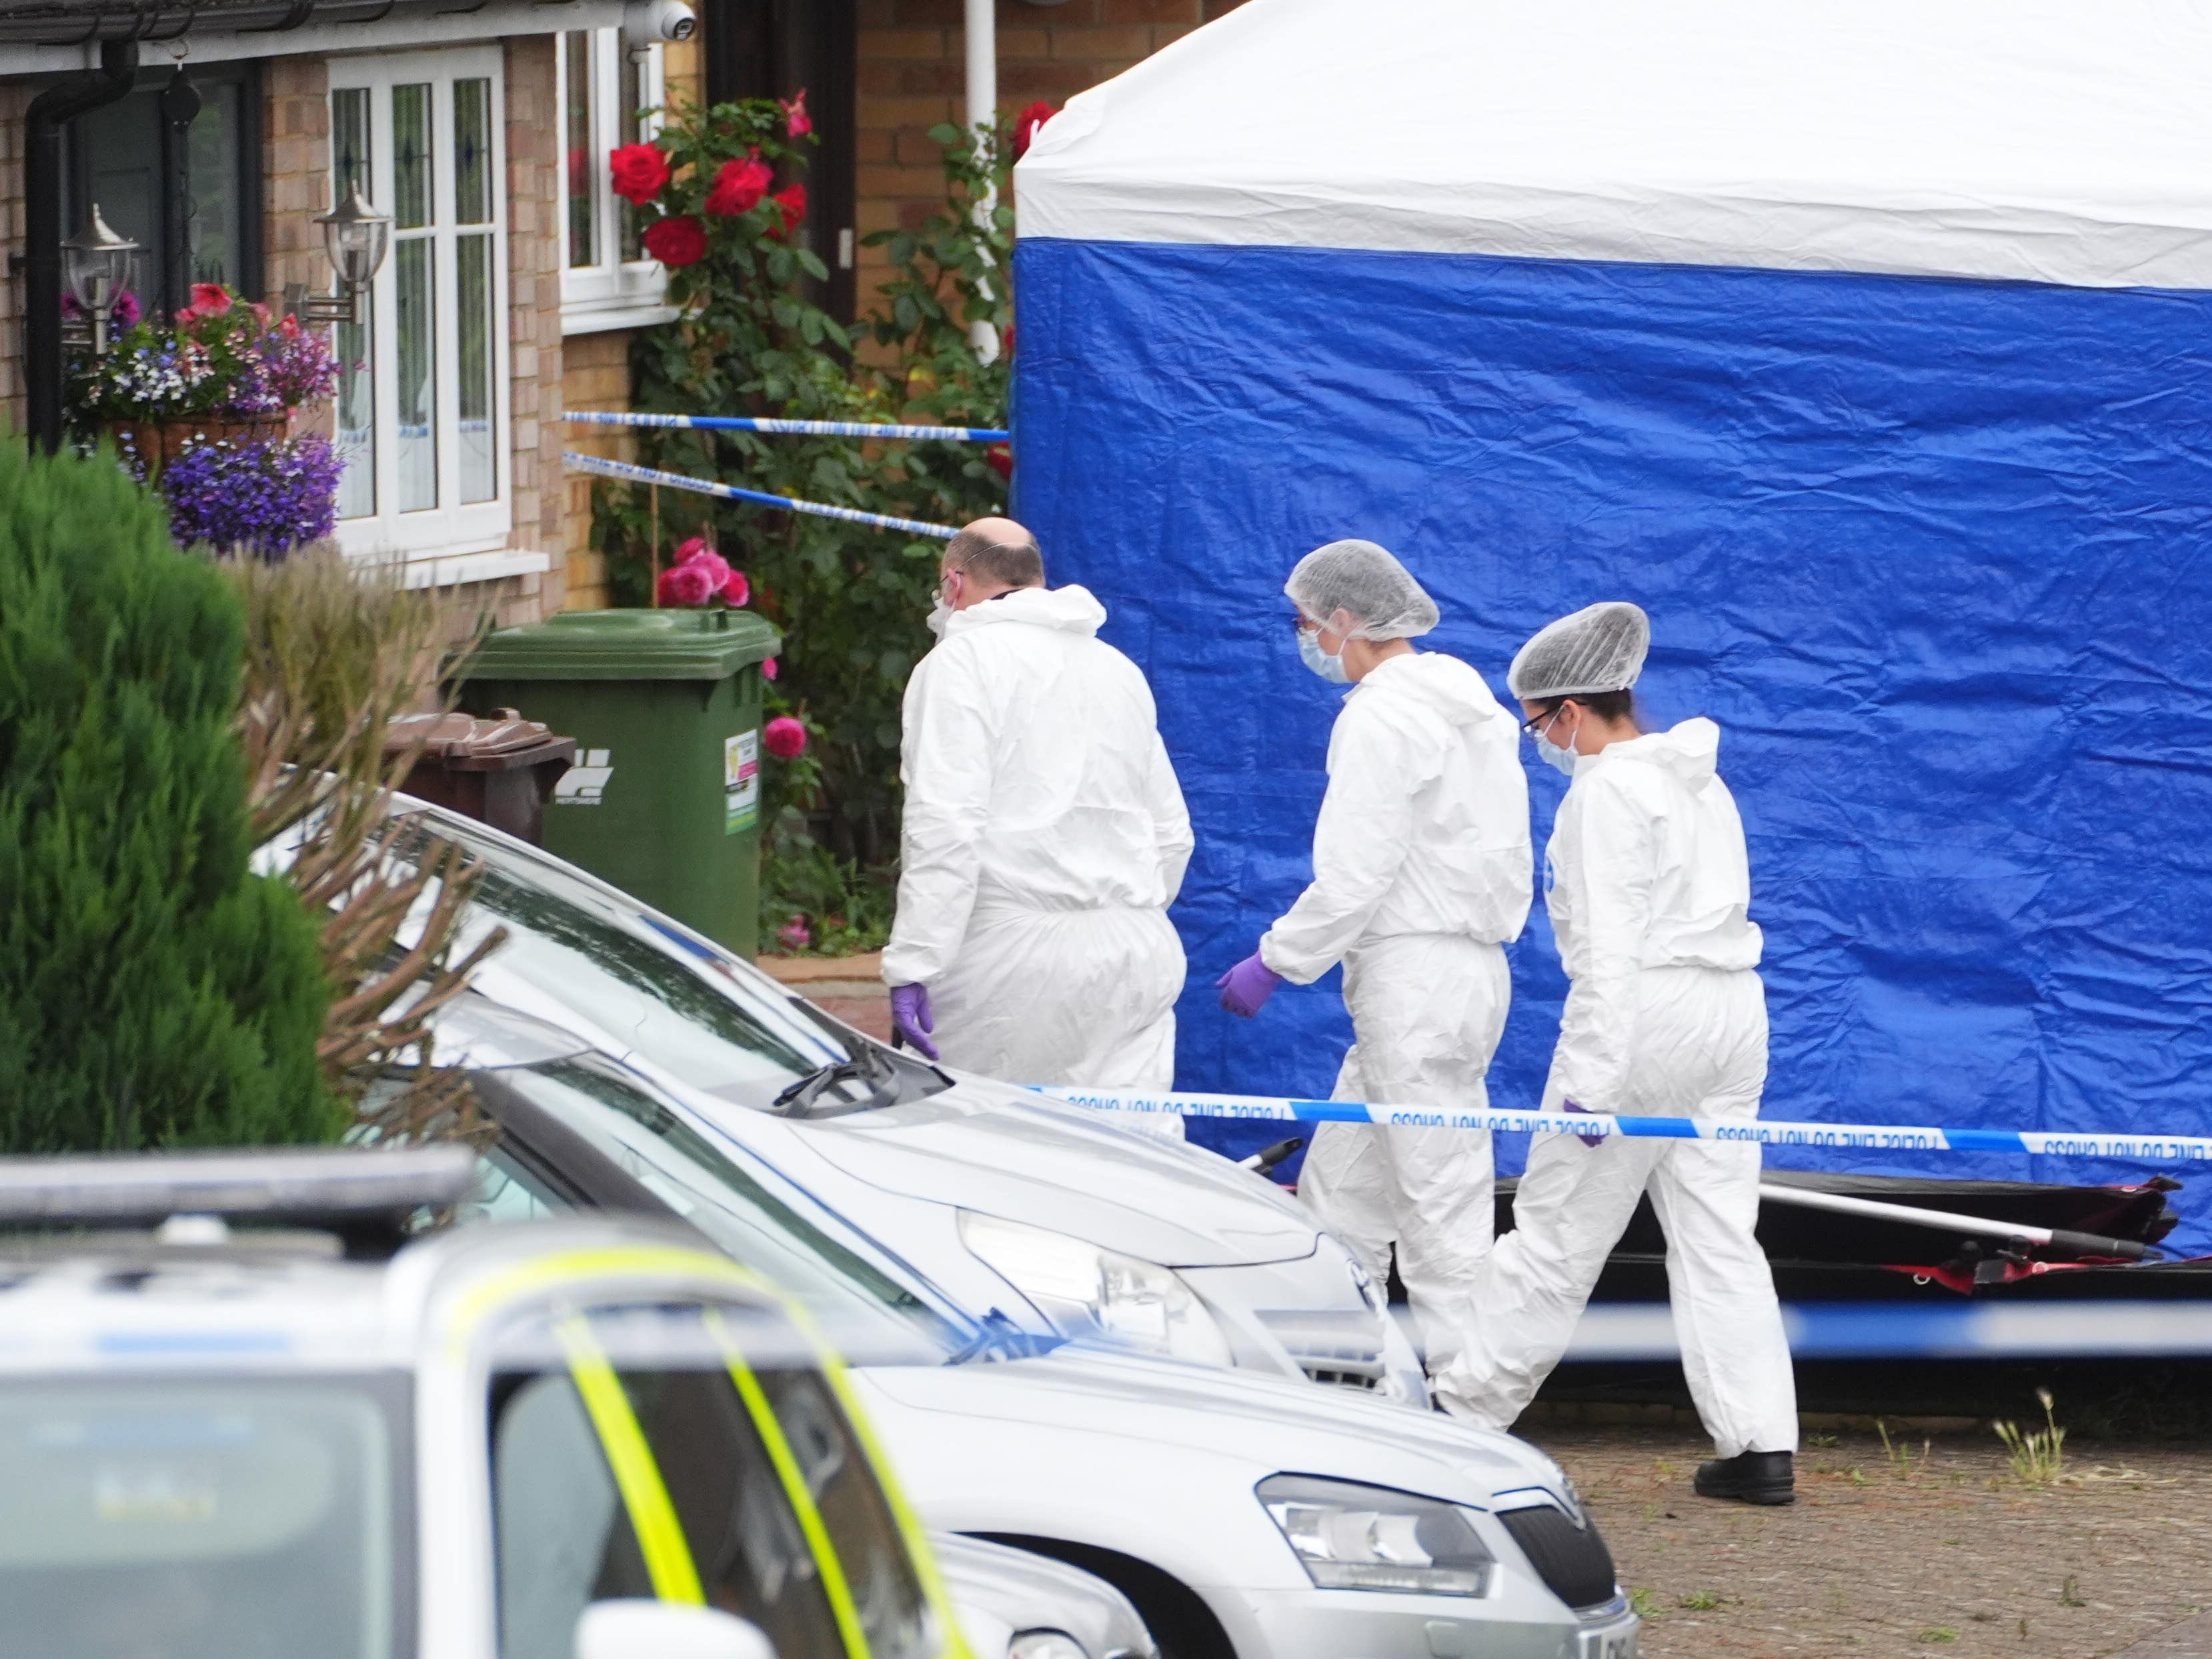 Triple-murder suspect sought after ‘devastating’ deaths of commentator’s family